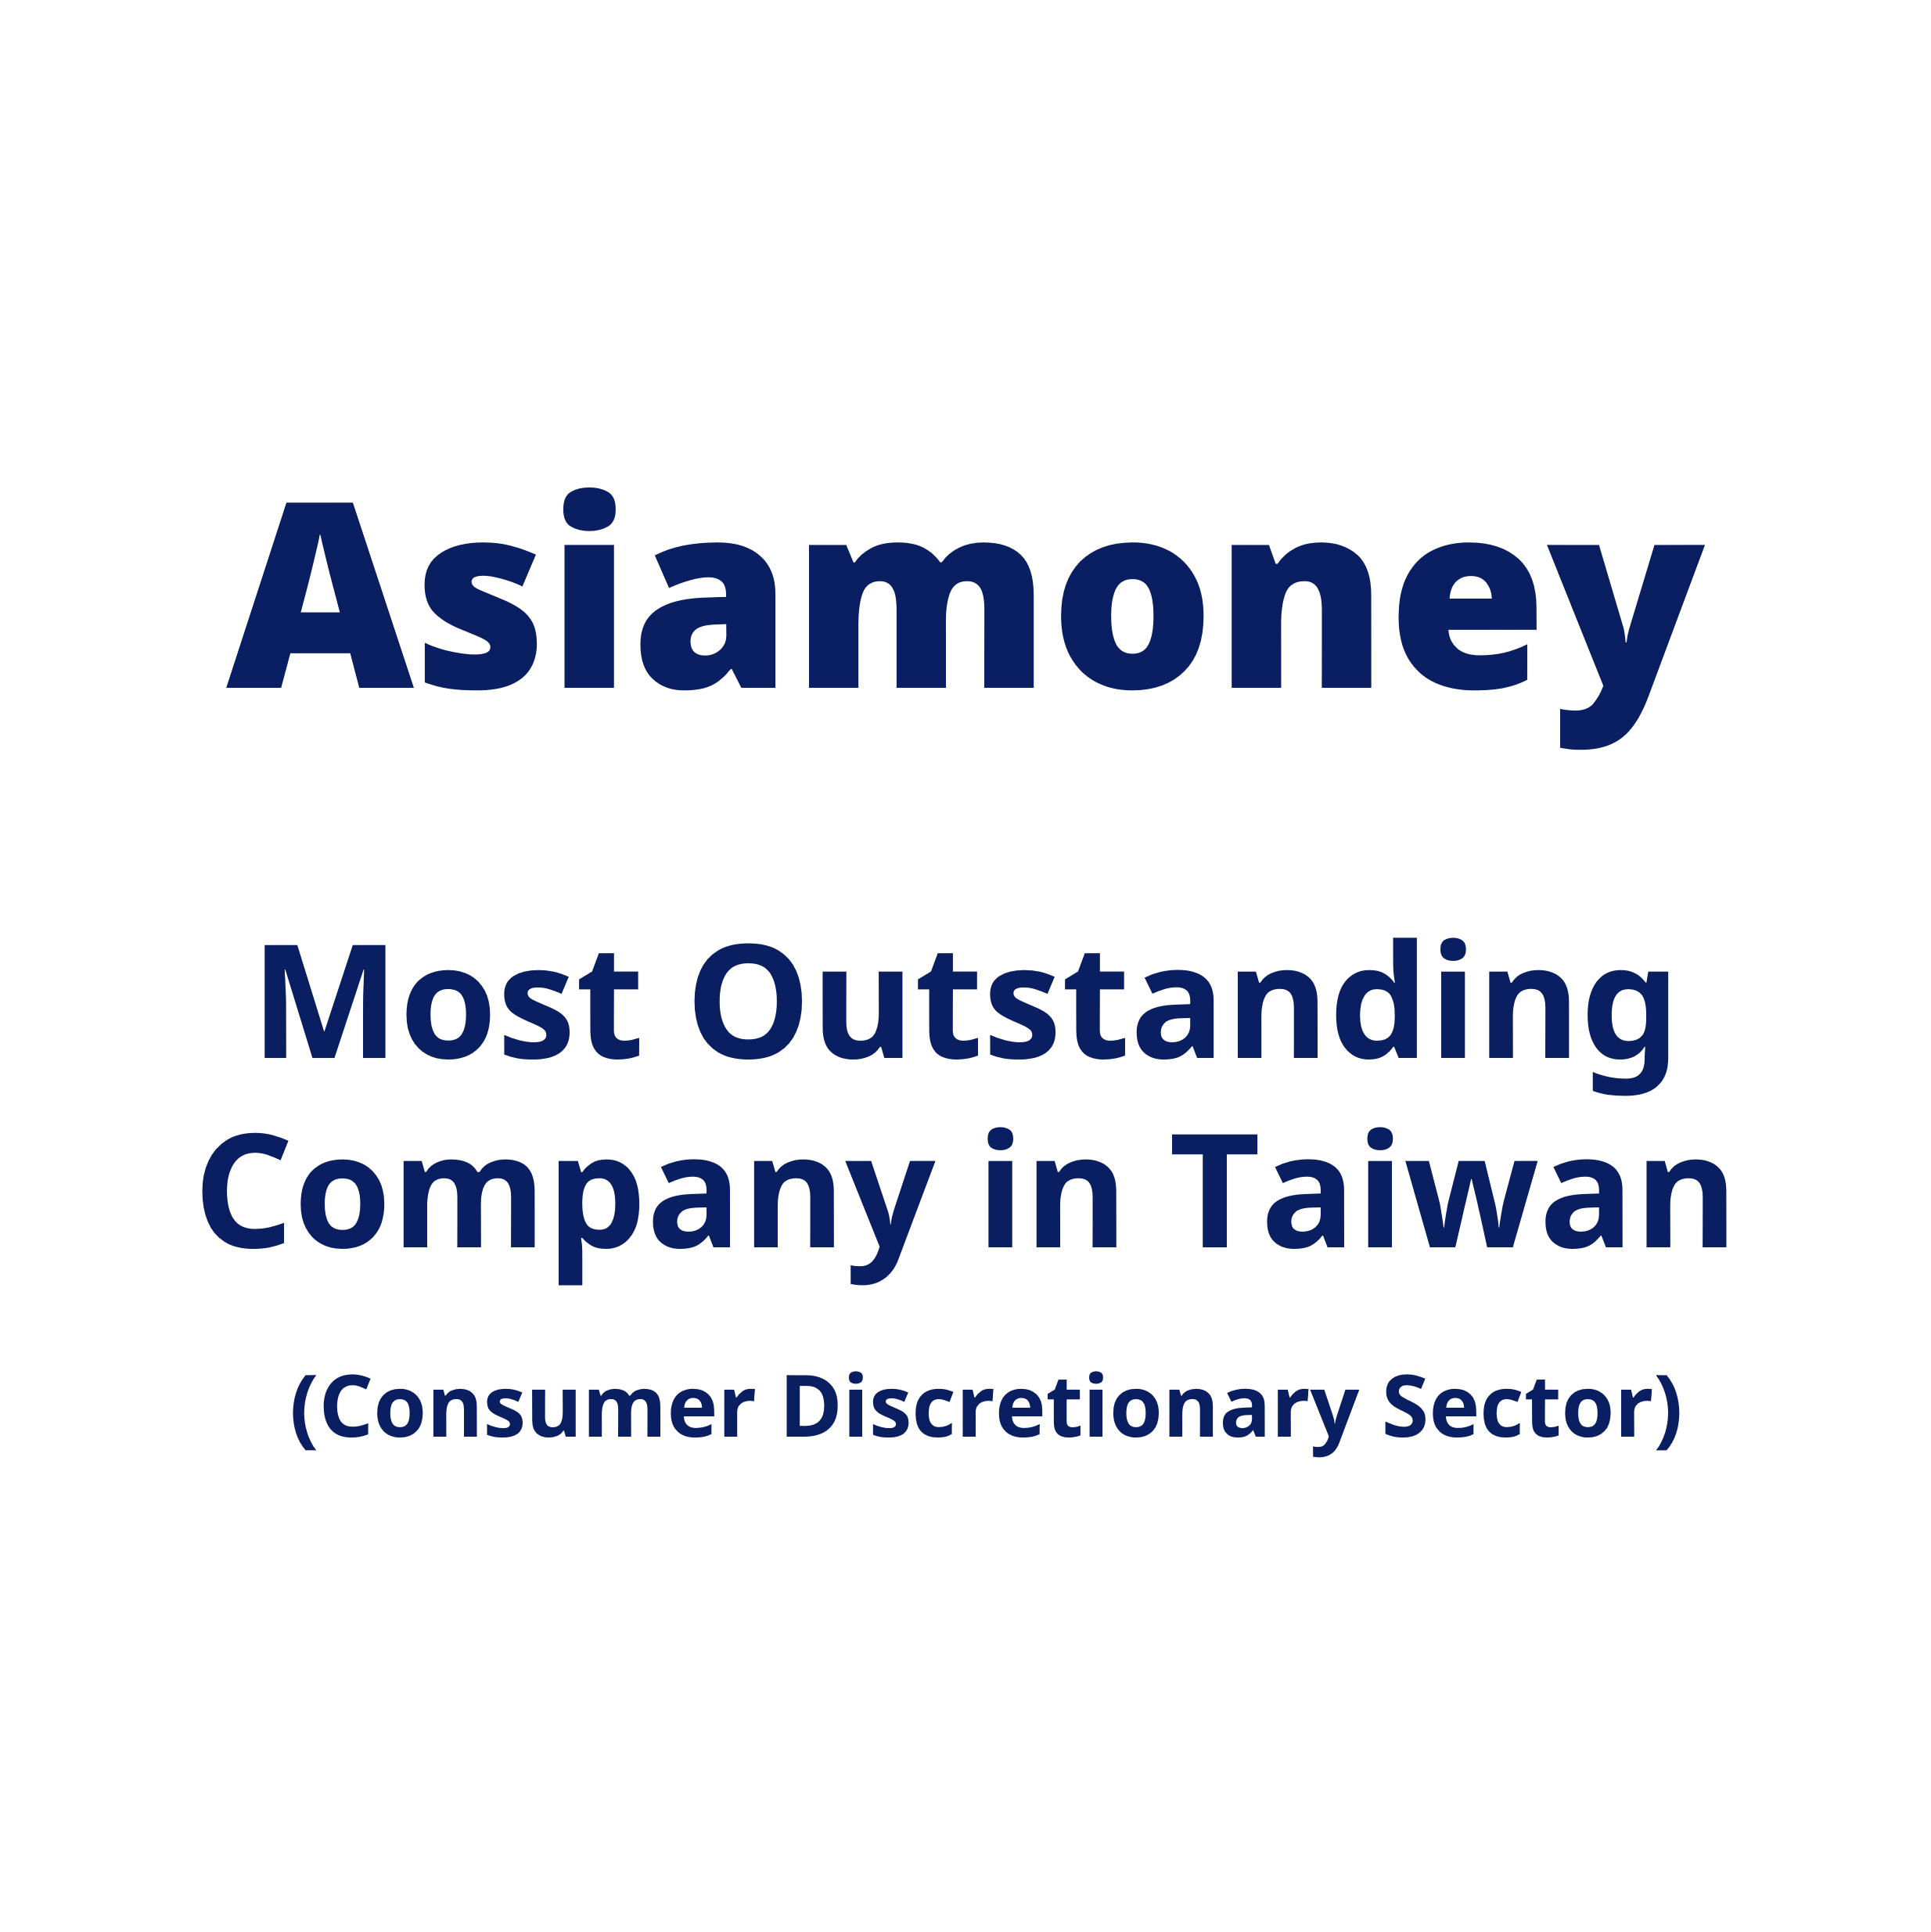 Asiamoney-台灣最傑出企業(非必需消費品產業)